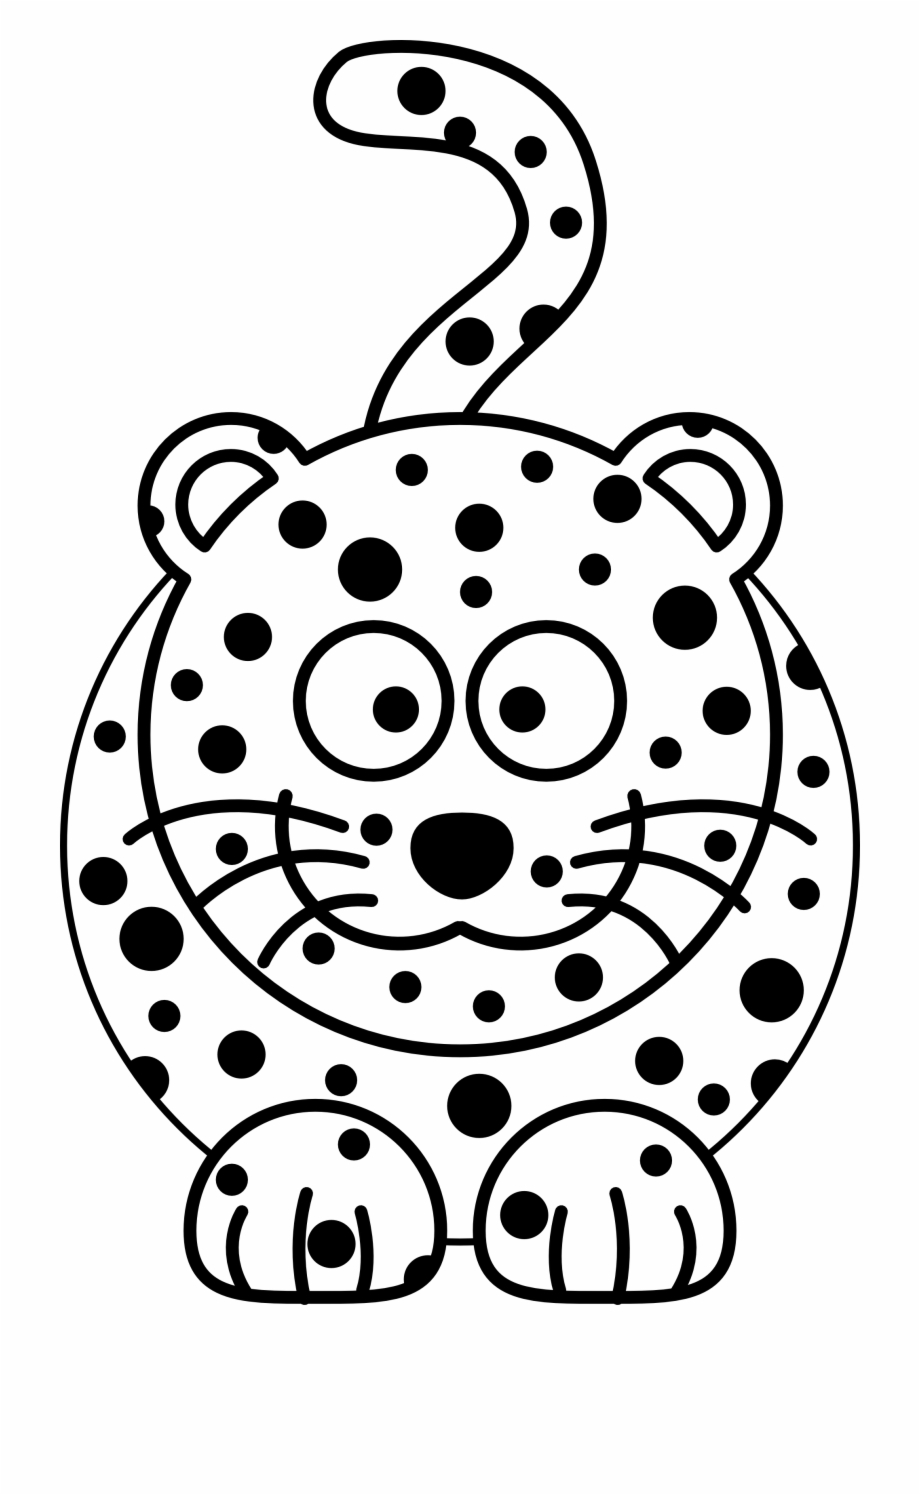 amur leopard easy drawing
